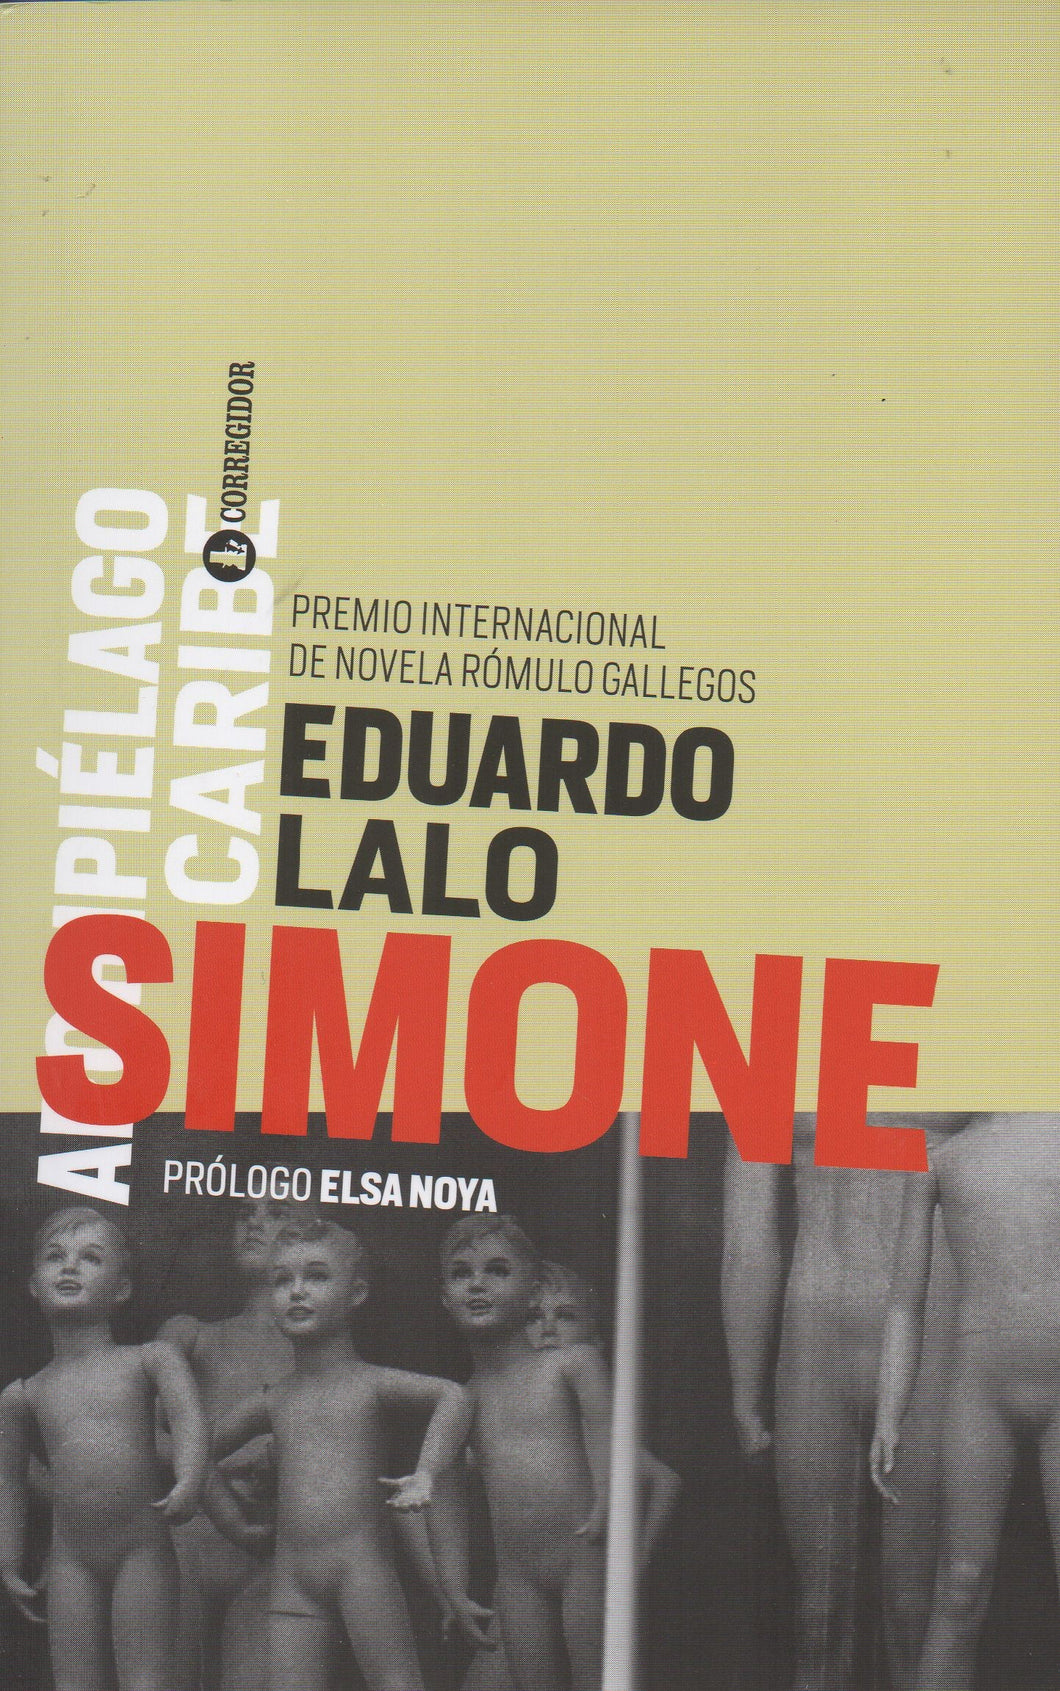 SIMONE - Eduardo Lalo